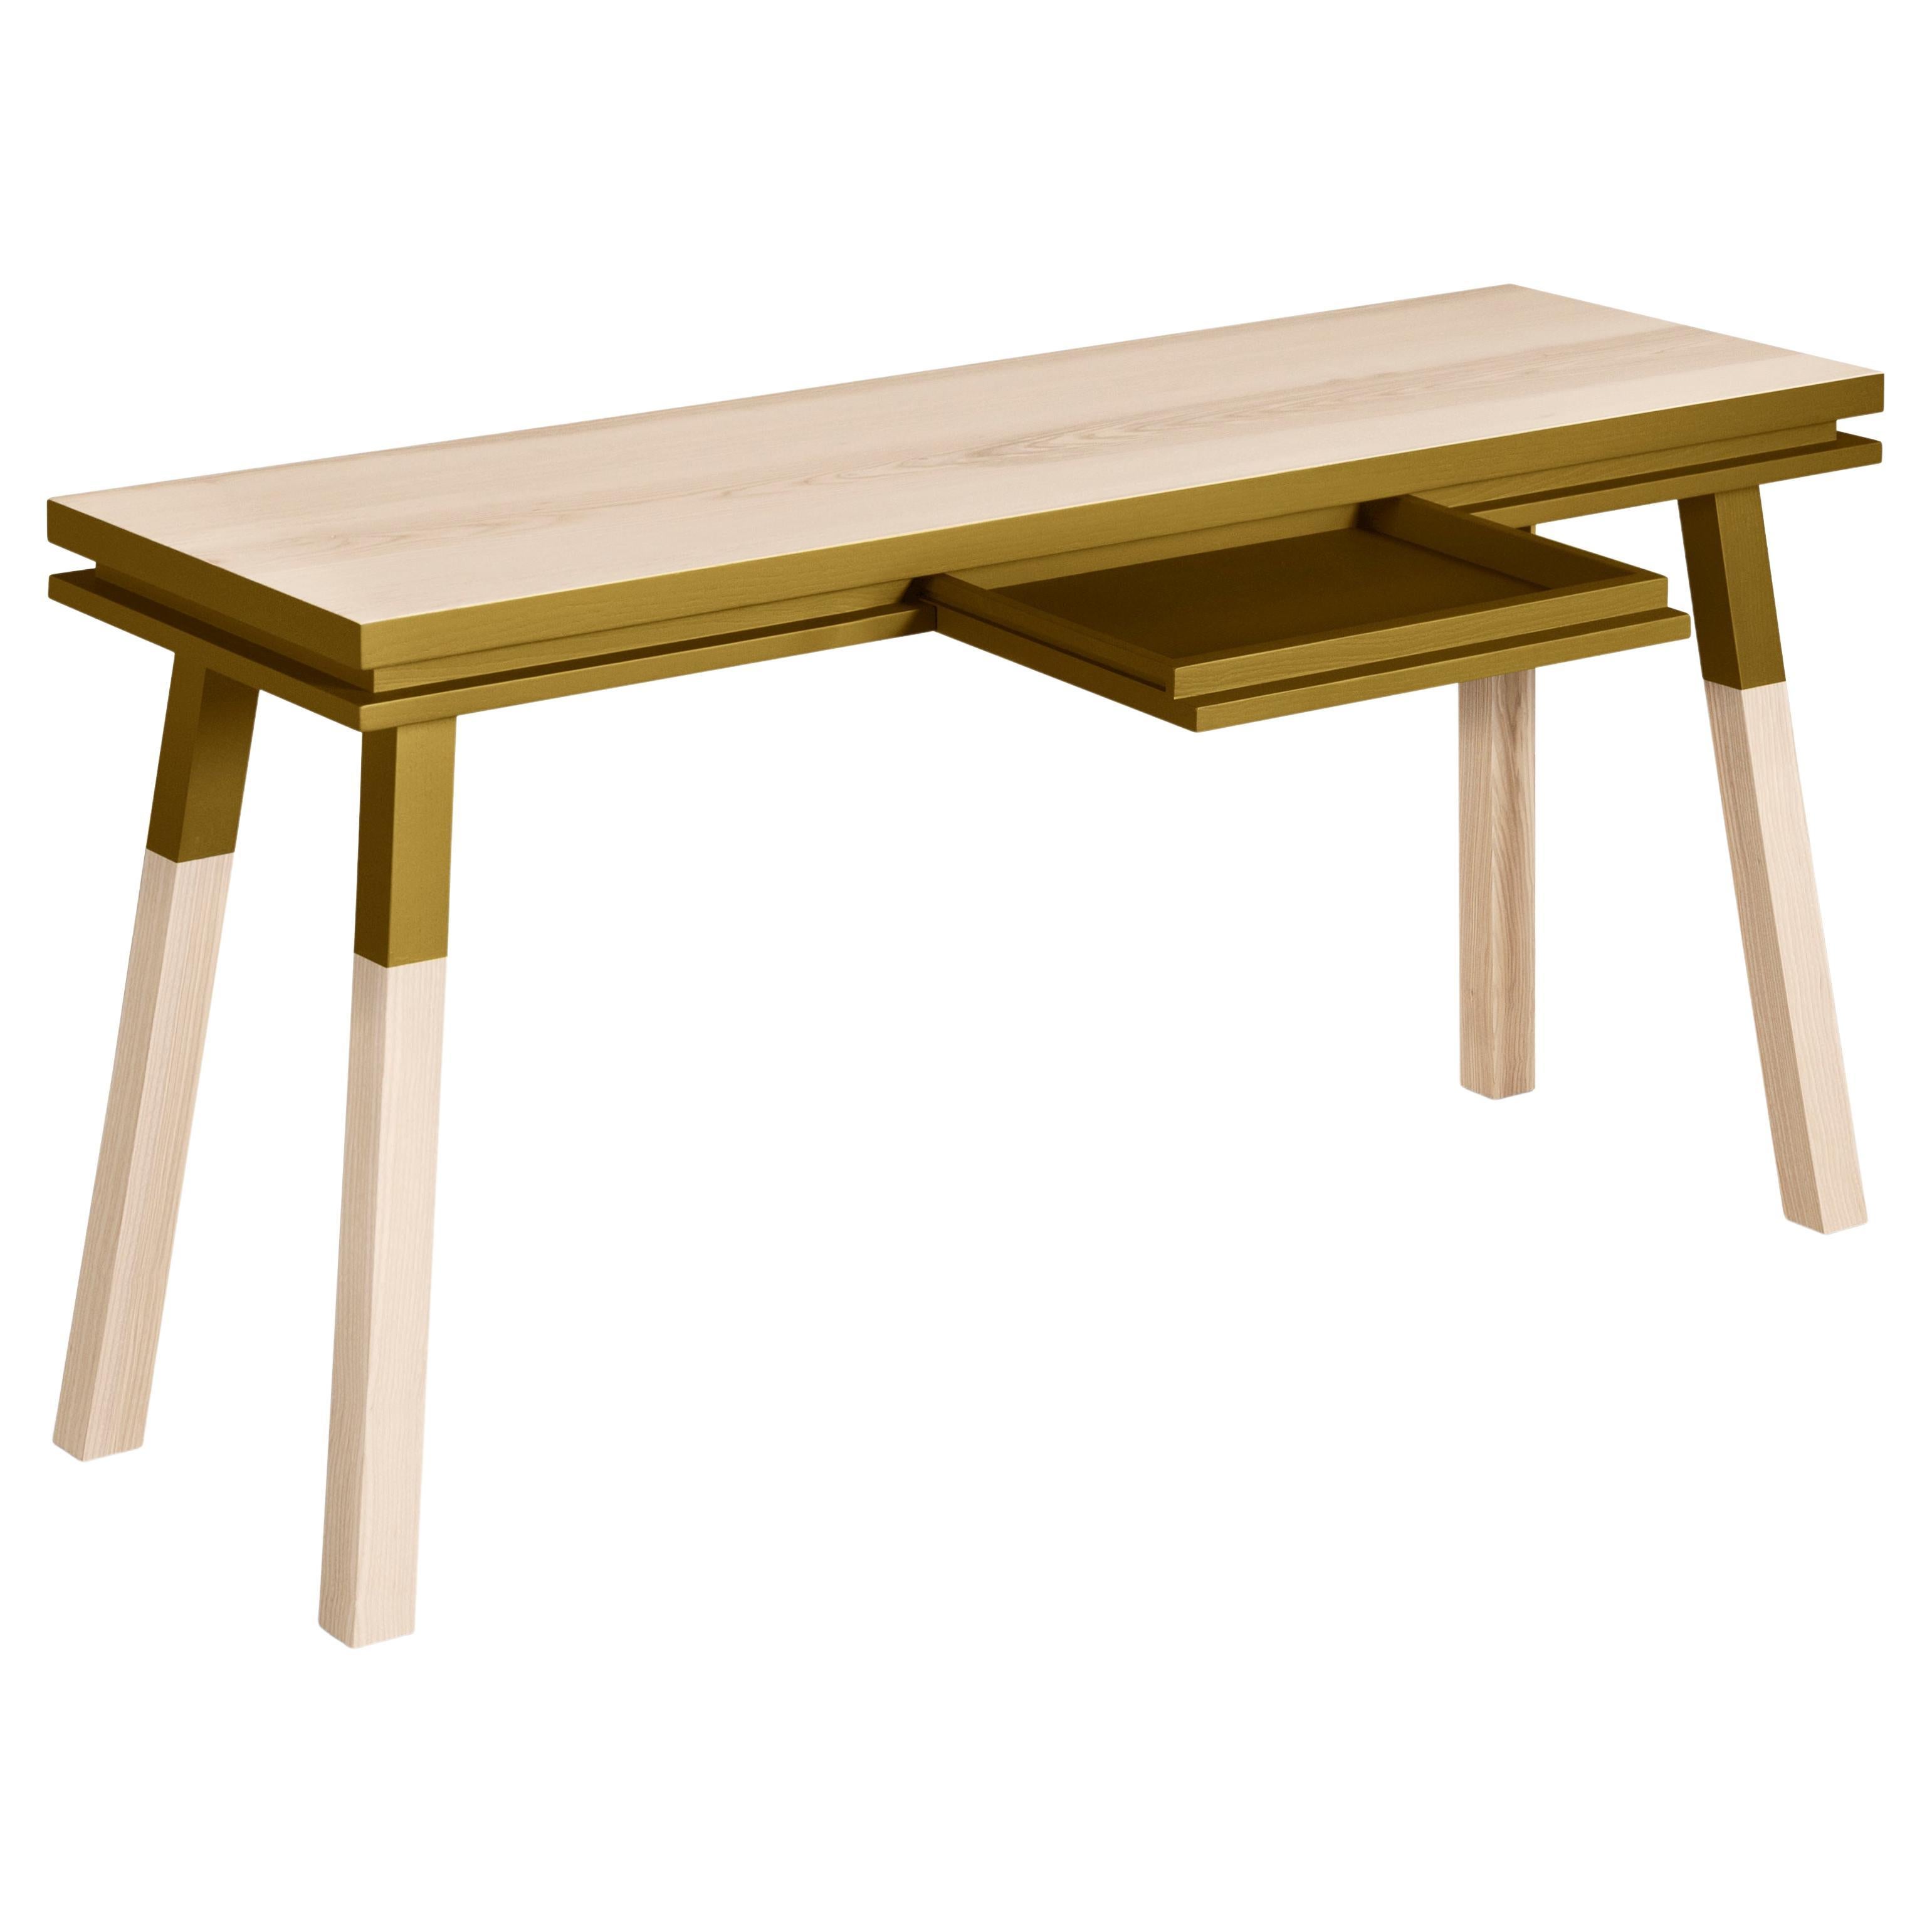 Rectangular Desk Table, Scandinavian Design by Eric Gizard, Paris, 11 Colours